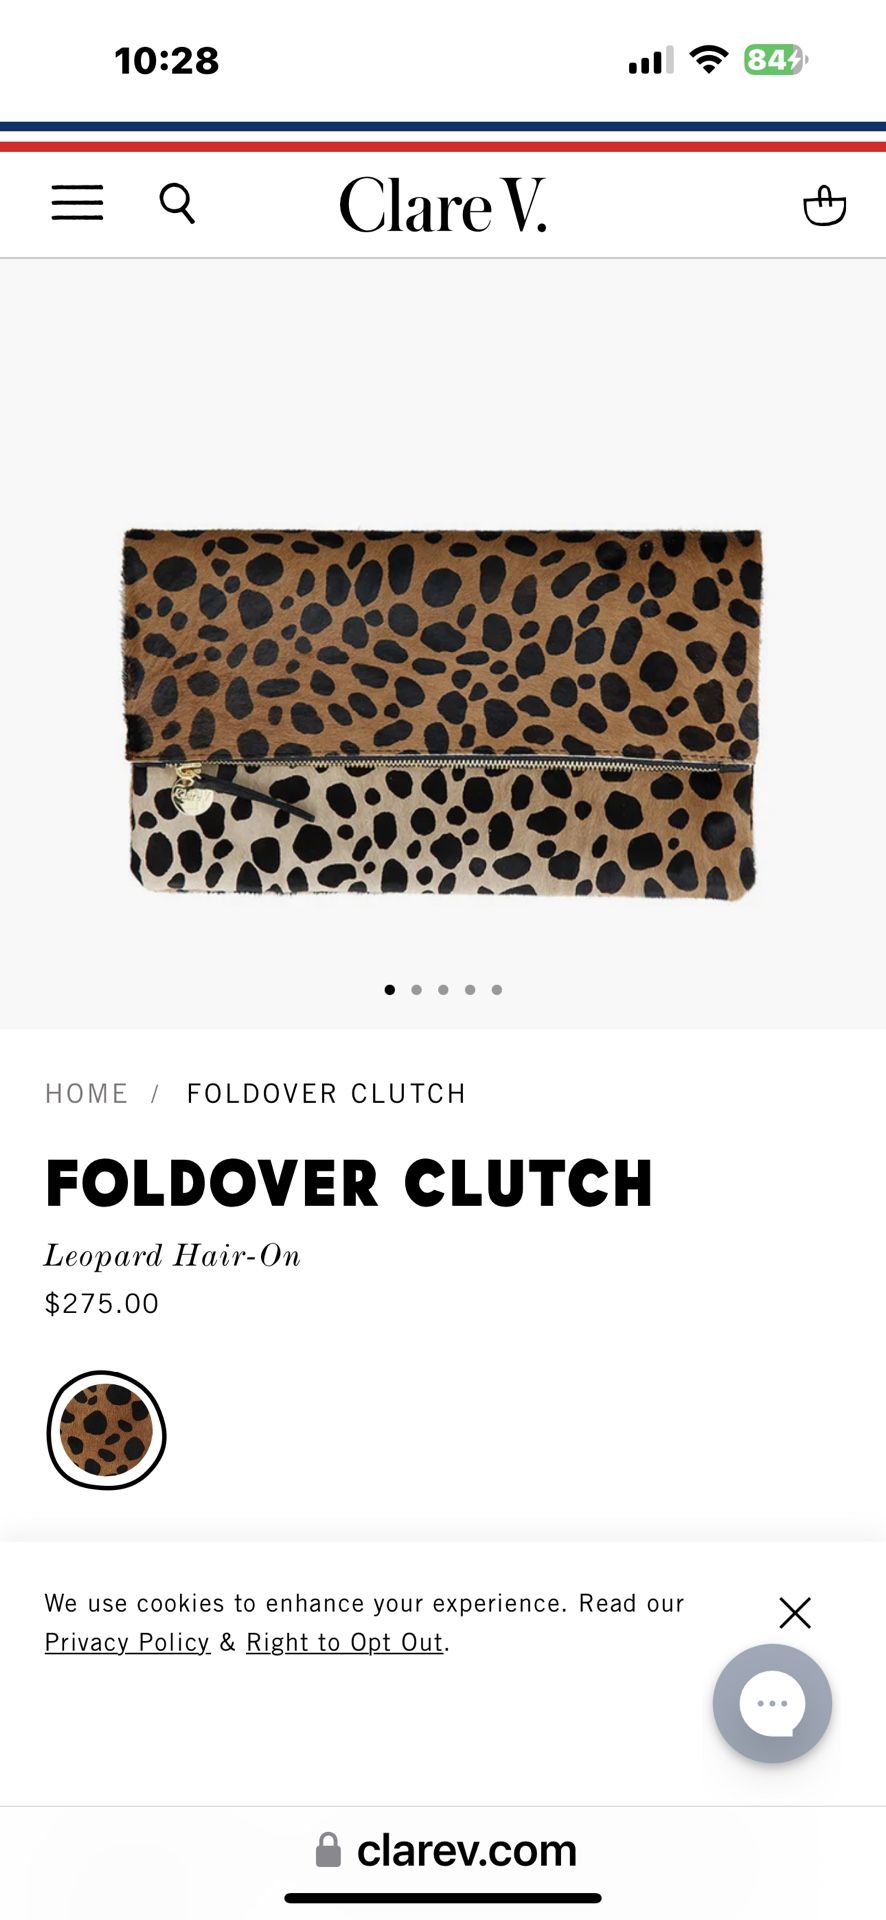 Clare V. Foldover Clutch in Leopard